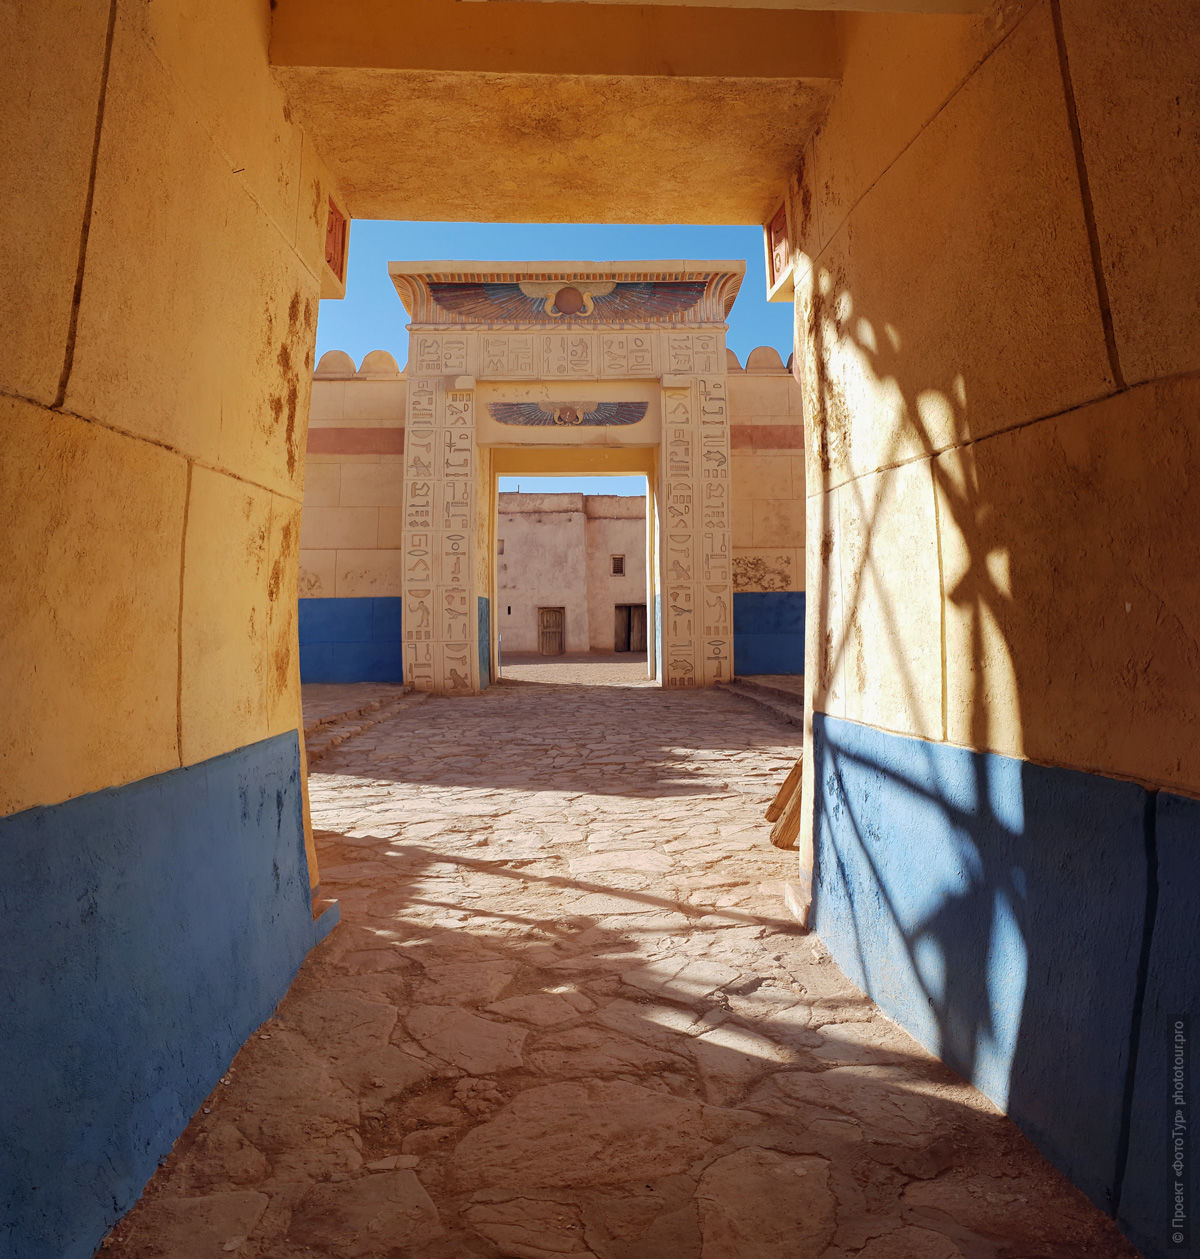 Atlas Film Studio, Ouarzazate. Adventure photo tour: medina, cascades, sands and ports of Morocco, April 4 - 17, 2020.